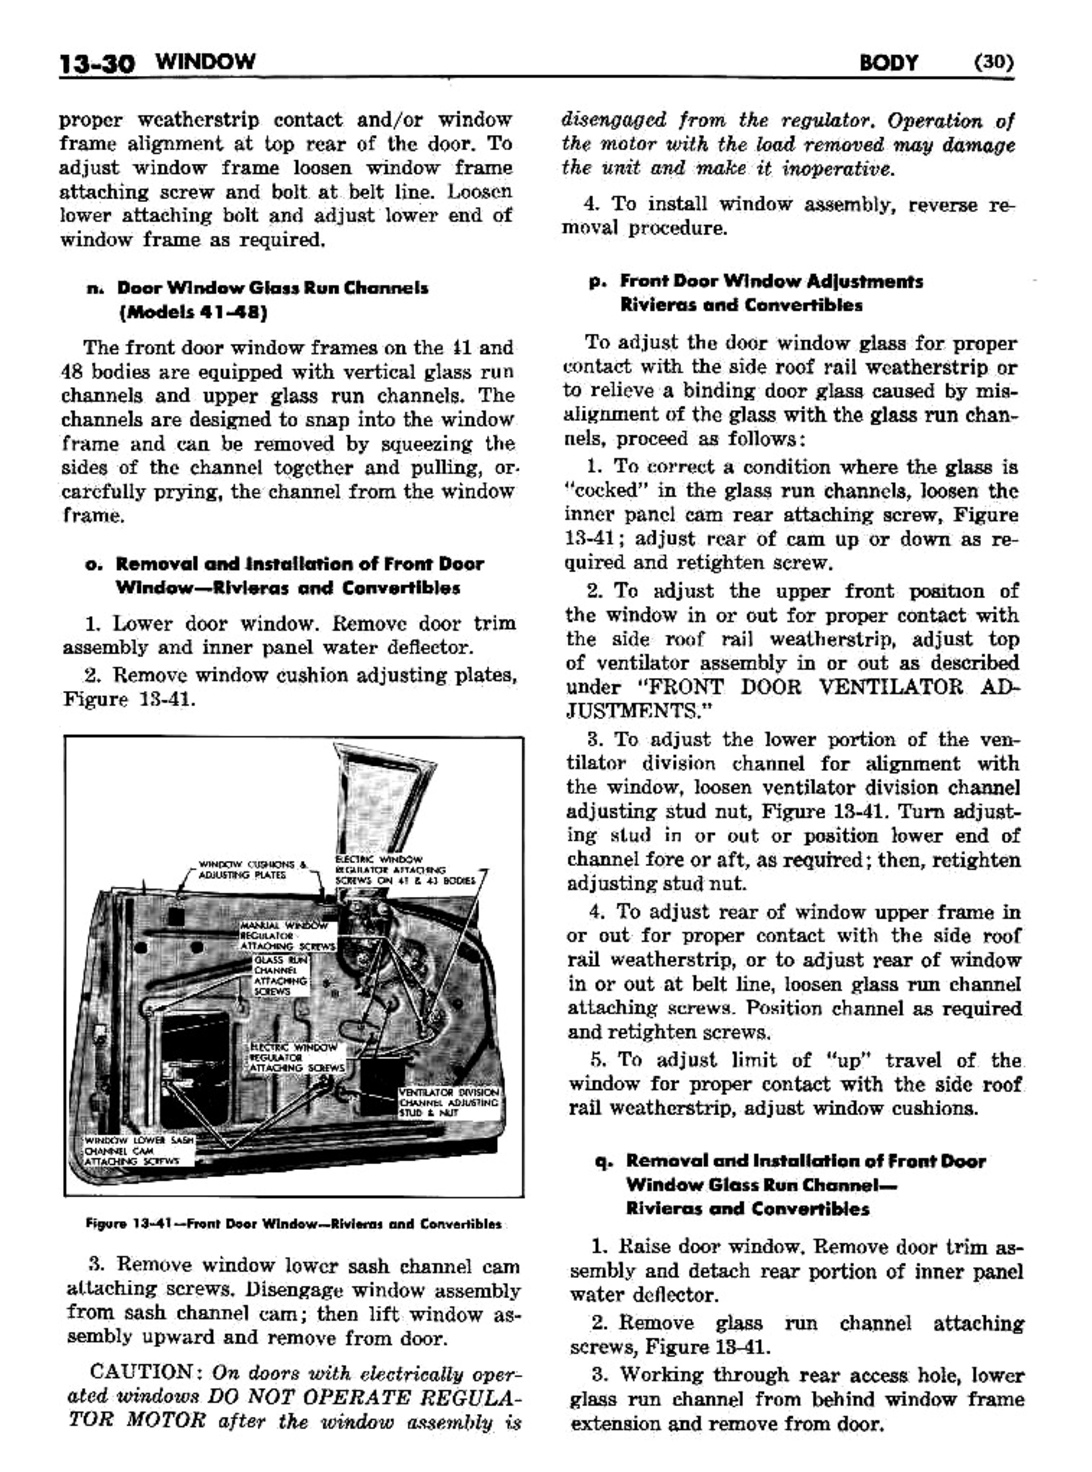 n_1957 Buick Body Service Manual-032-032.jpg